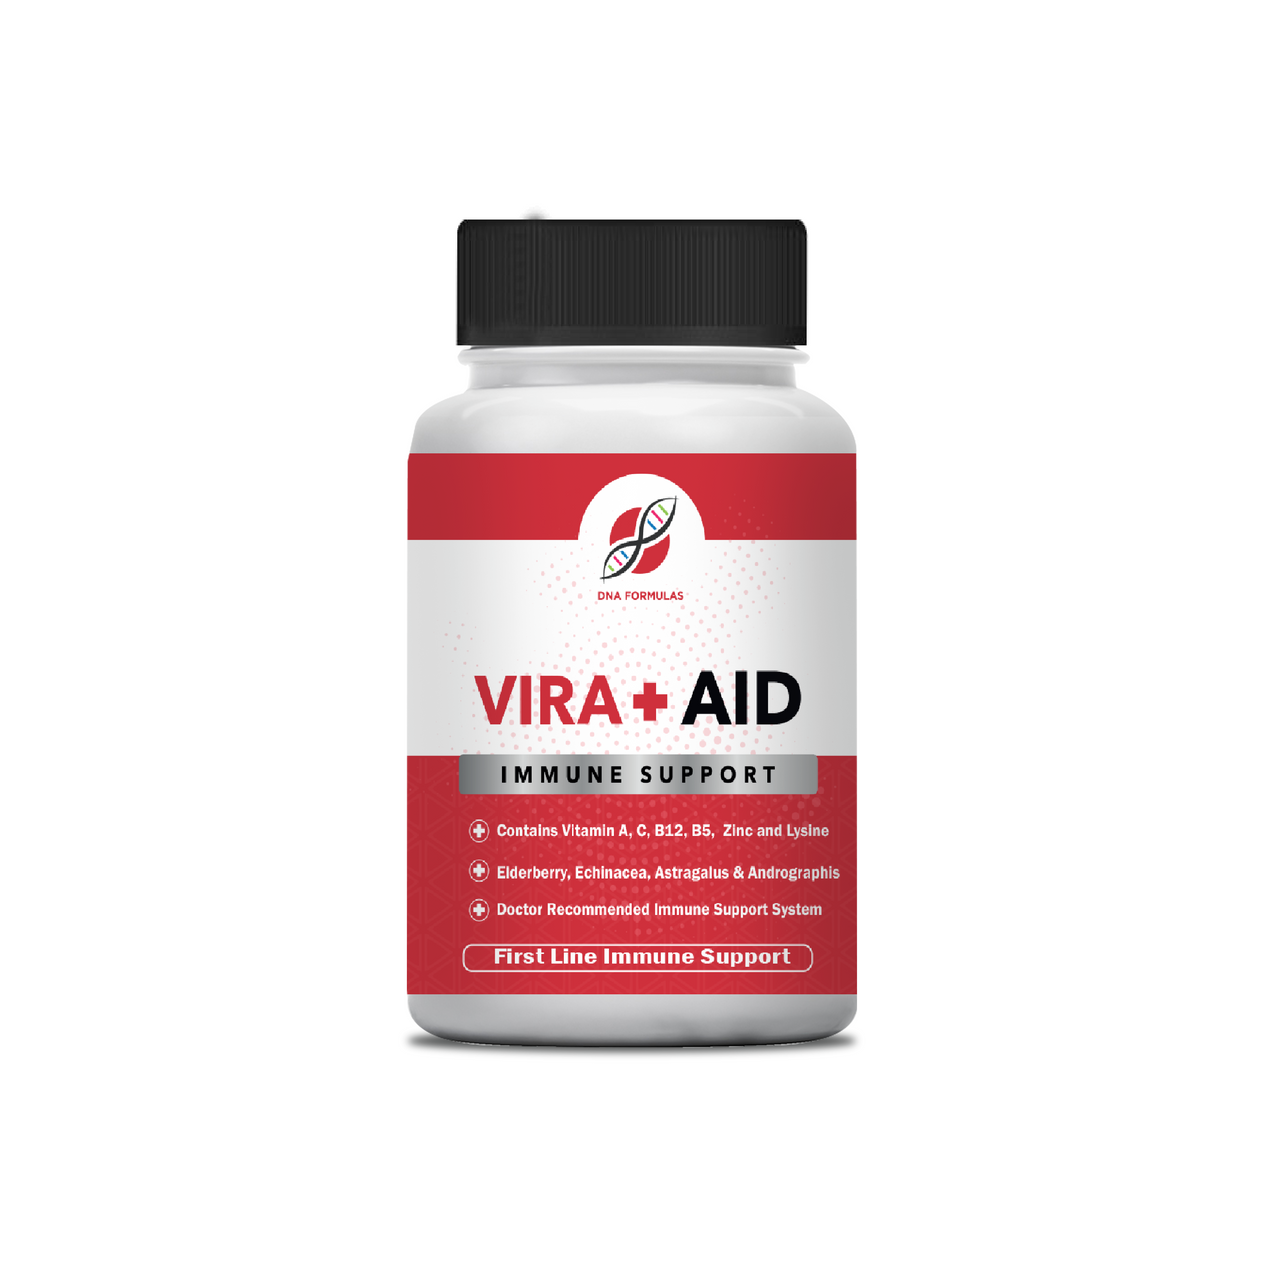 Vira+Aid - DNA Formulas - First Aid Against Viruses - Vitamin A, C, B12, Pantothenic Acid, Zinc, Astragalus, Elderberry Andrographis, Echinacea, L-Lysine, Acerola Fruit